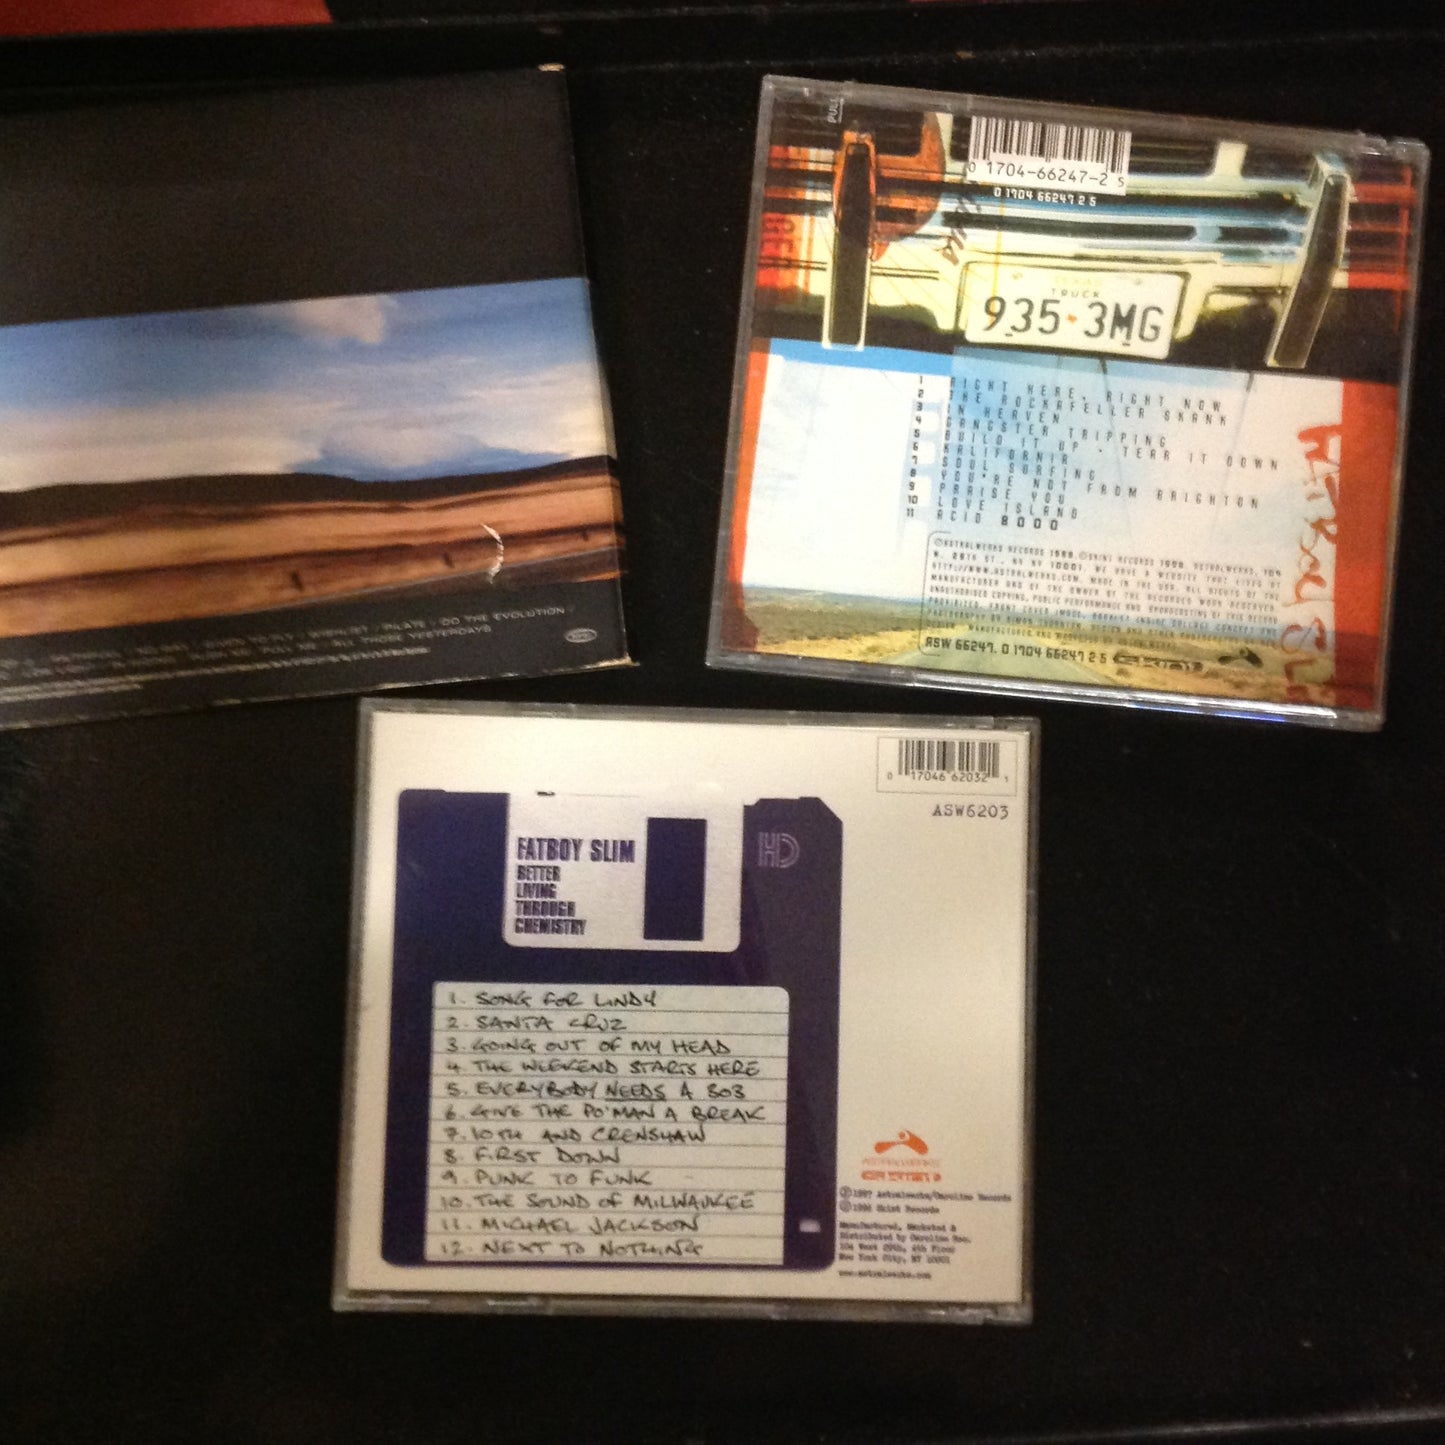 2 Disc SET BARGAIN CDs Fatboy Slim Pearl Jam